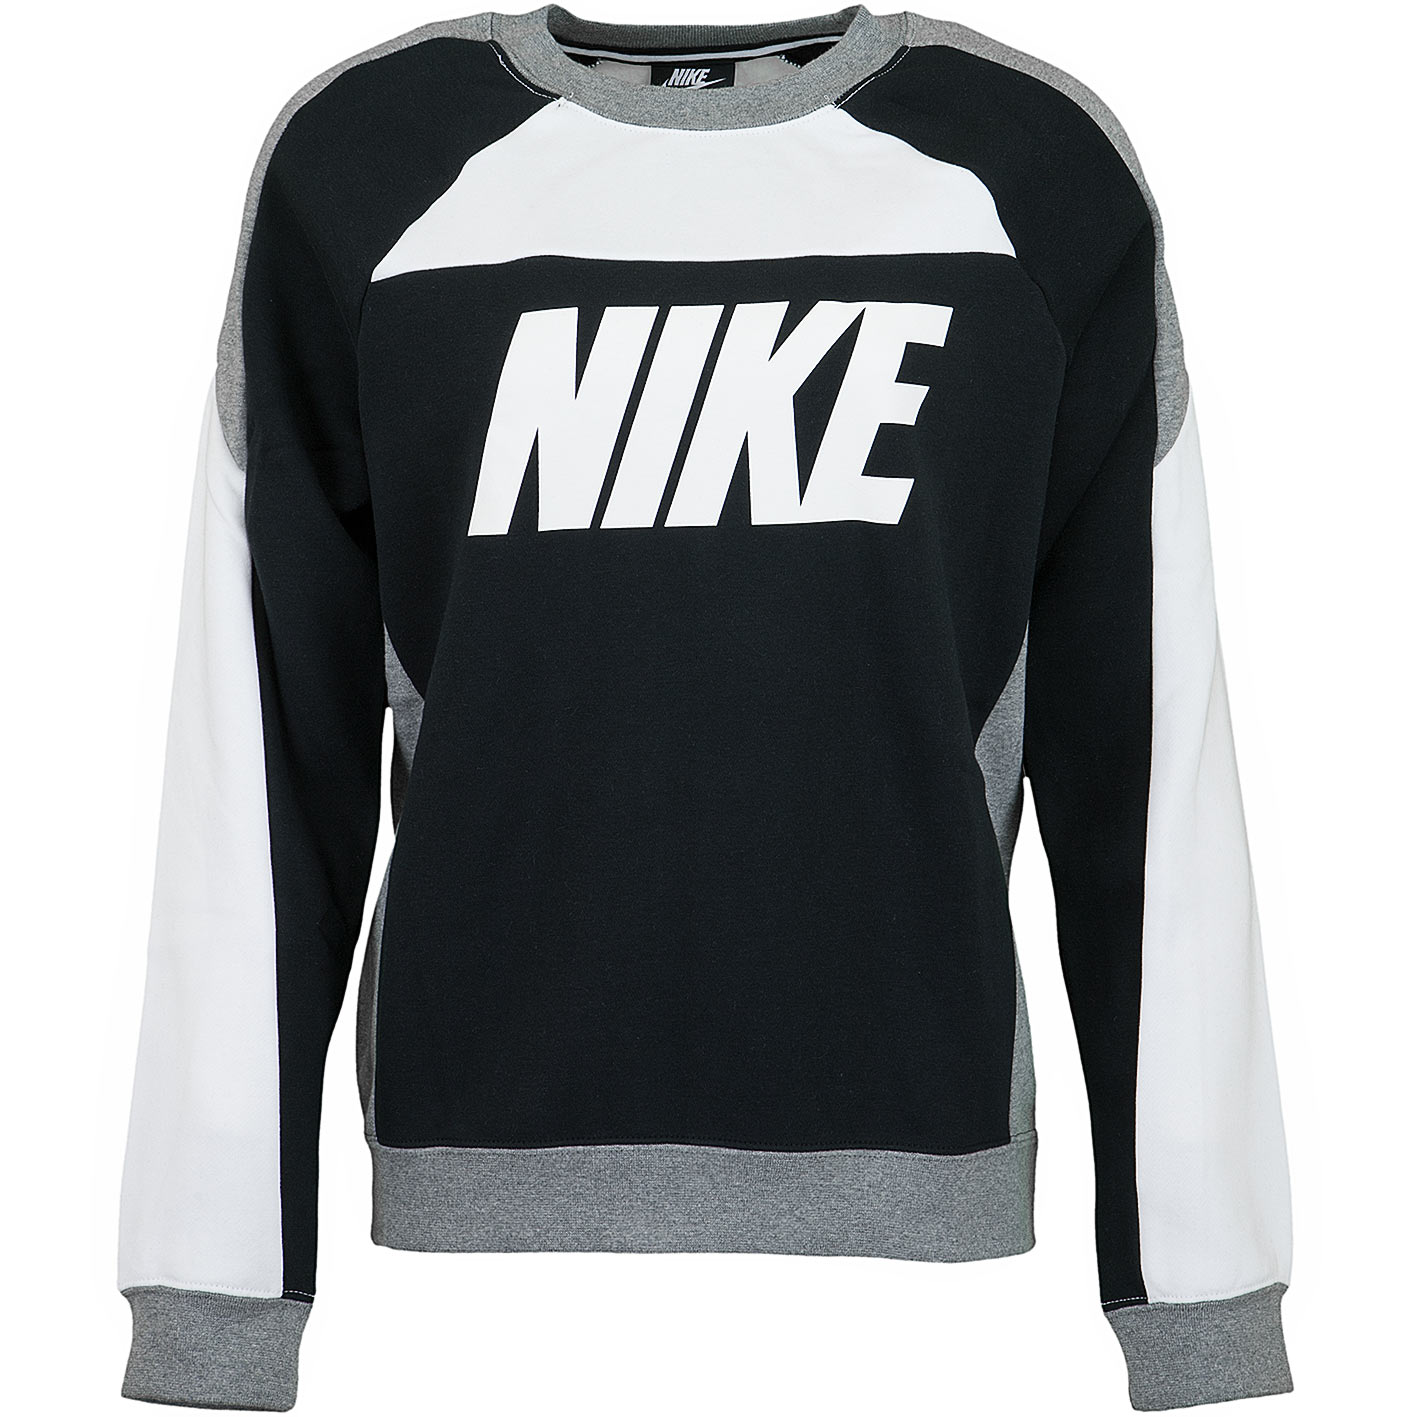 ☆ Nike Damen Sweatshirt CB Fleece weiß/schwarz - hier bestellen!